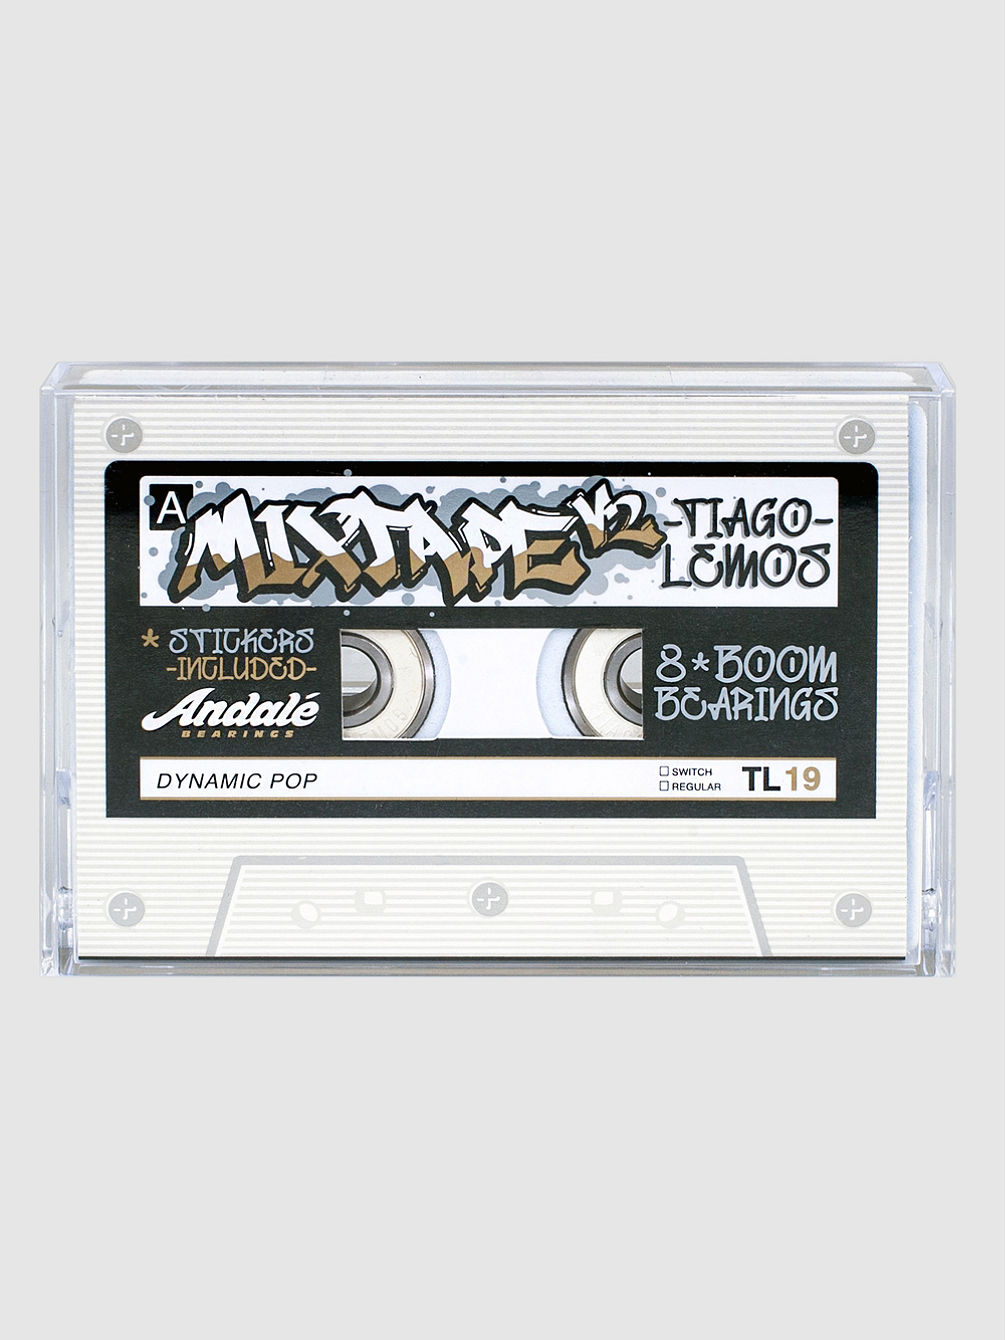 Tiago Mixtape Volume 2 Bearings